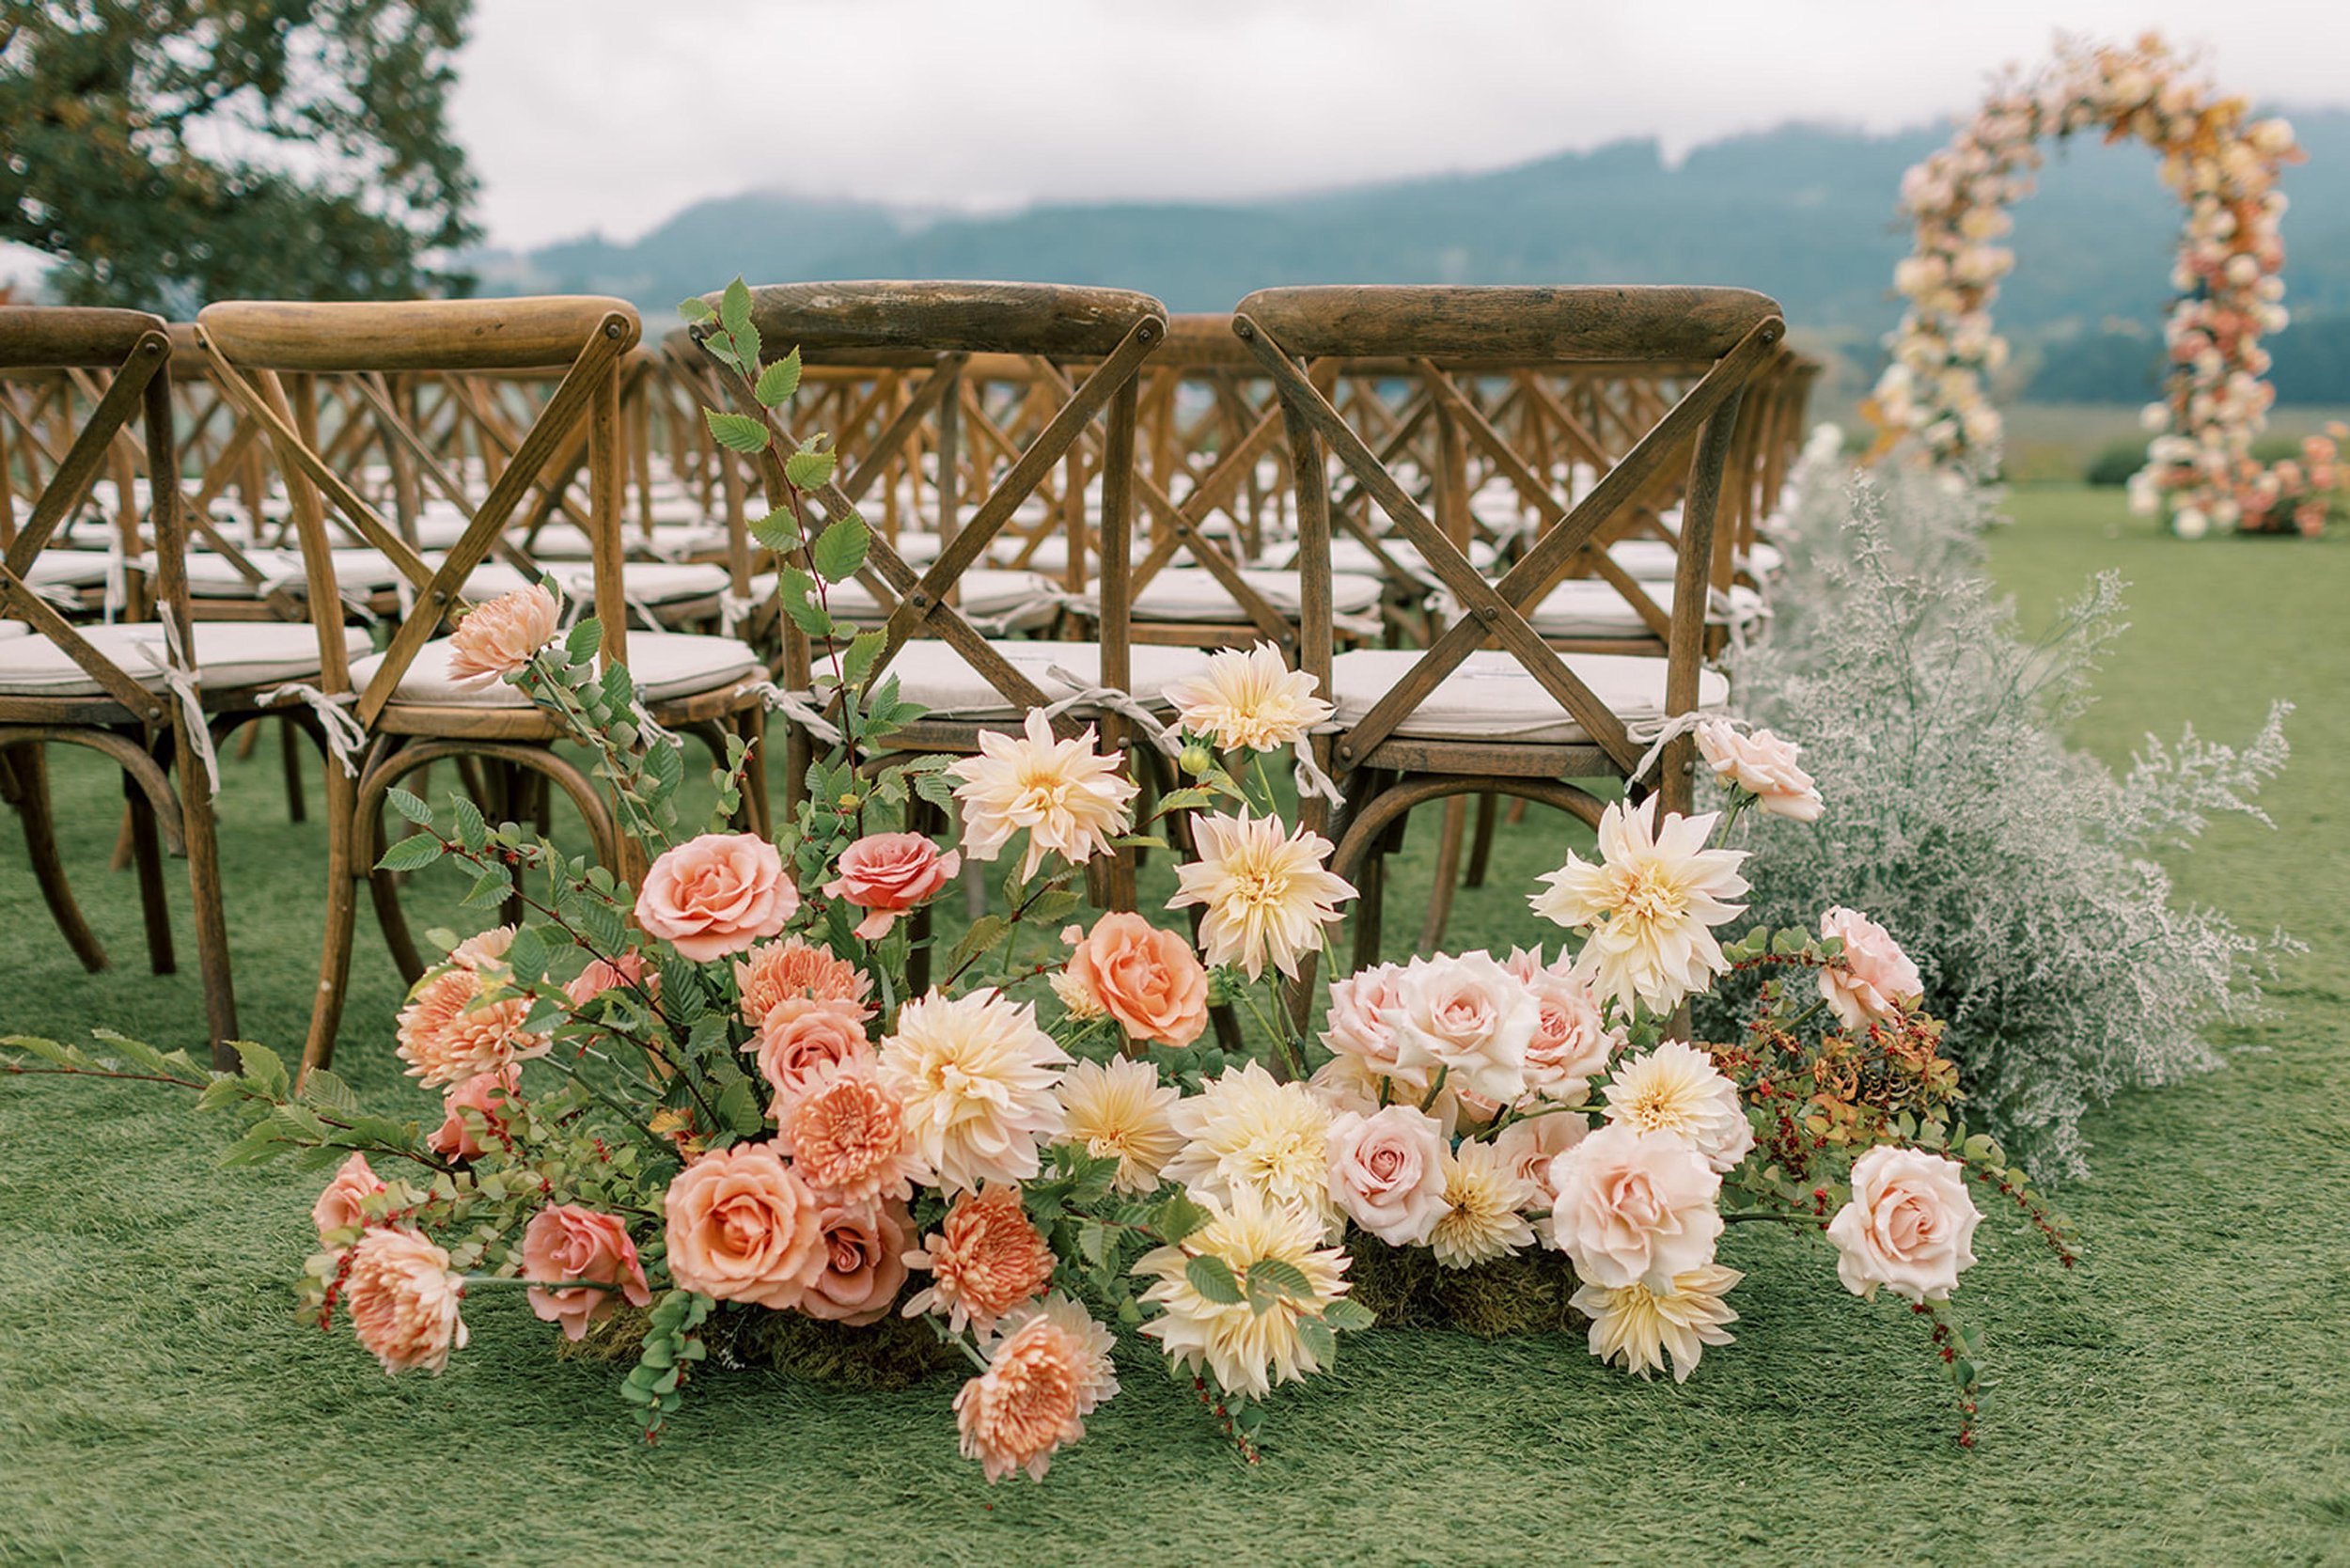 stylish-floral-design-at-wedding-ceremony-in-bend-oregon.jpg